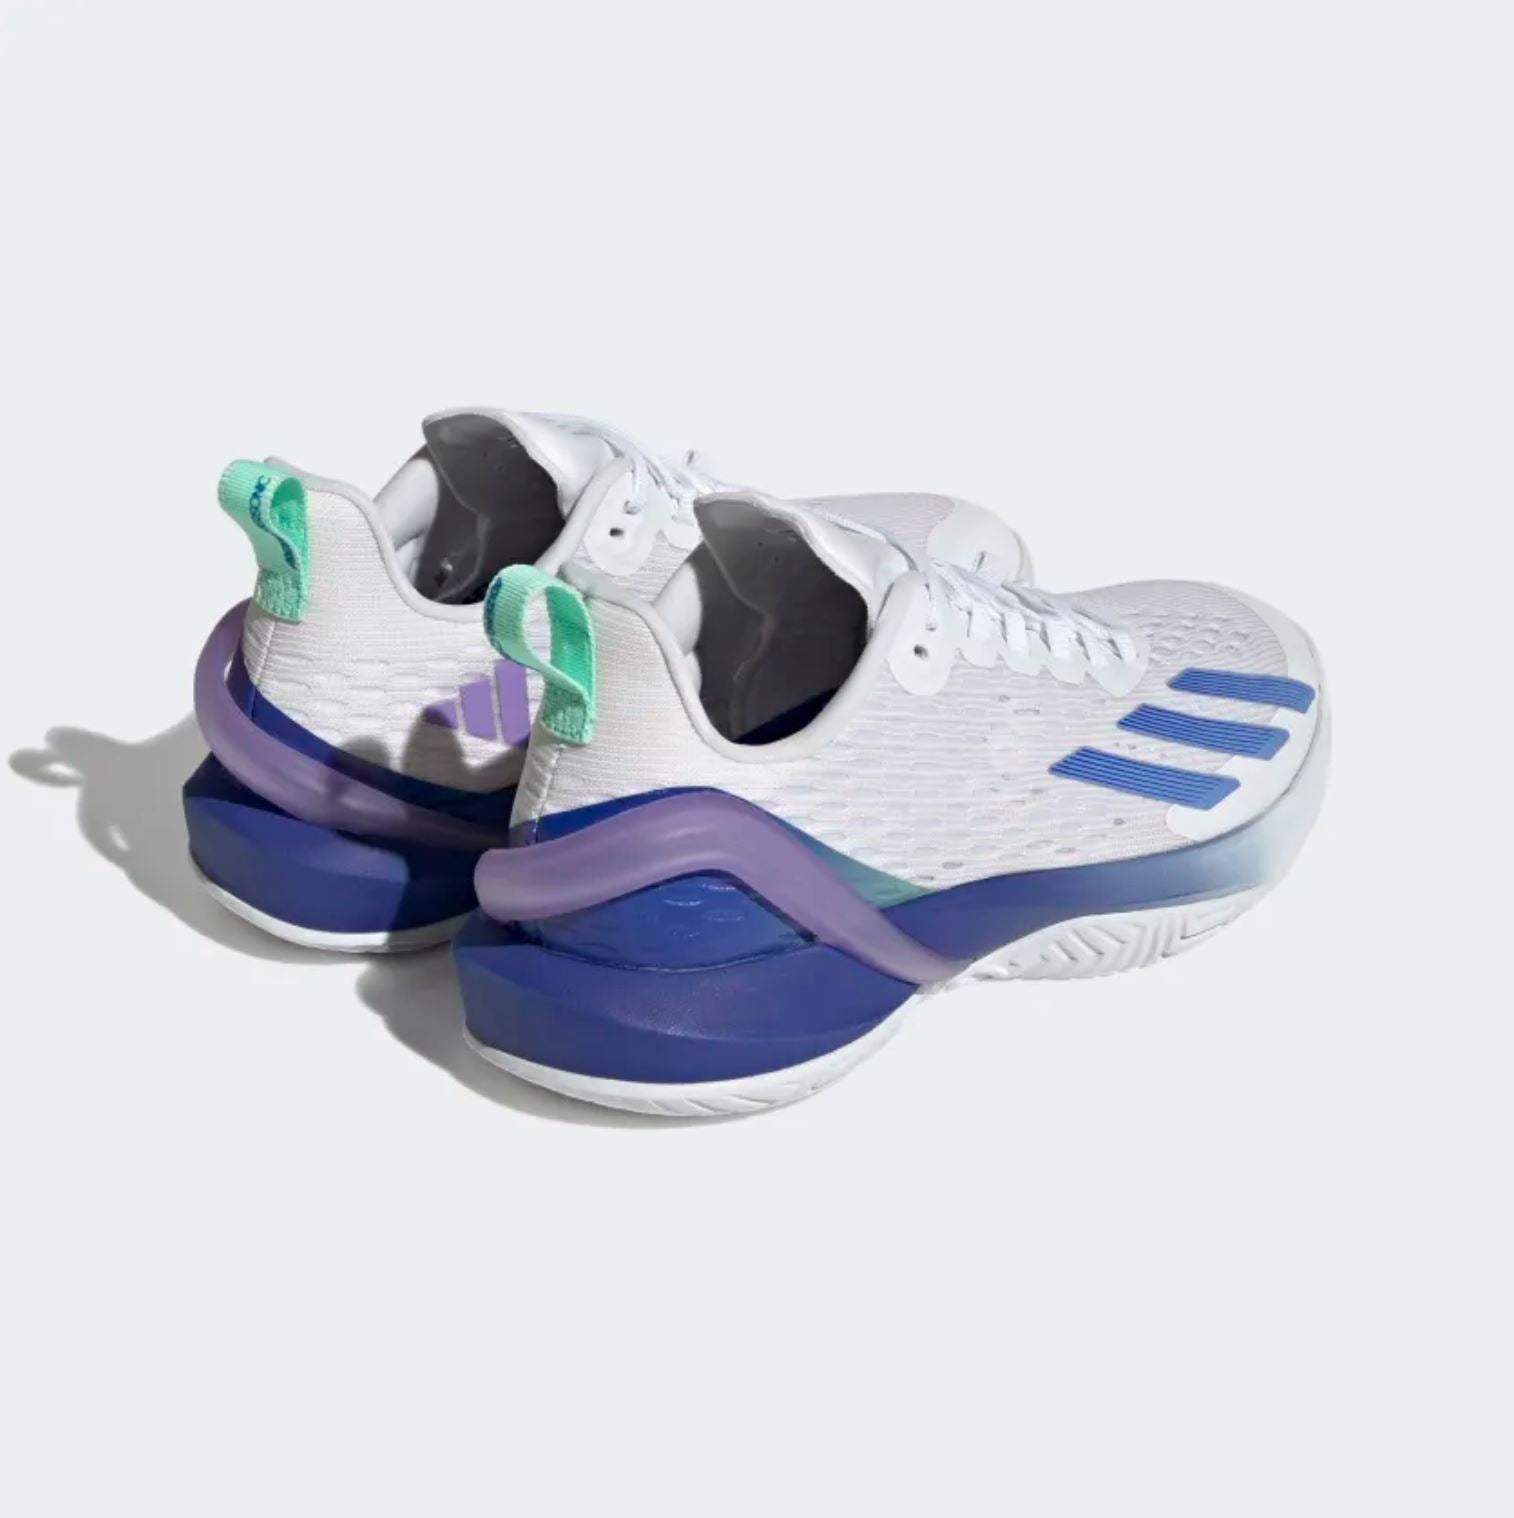 Adidas Adizero Cybersonic Women's Shoes